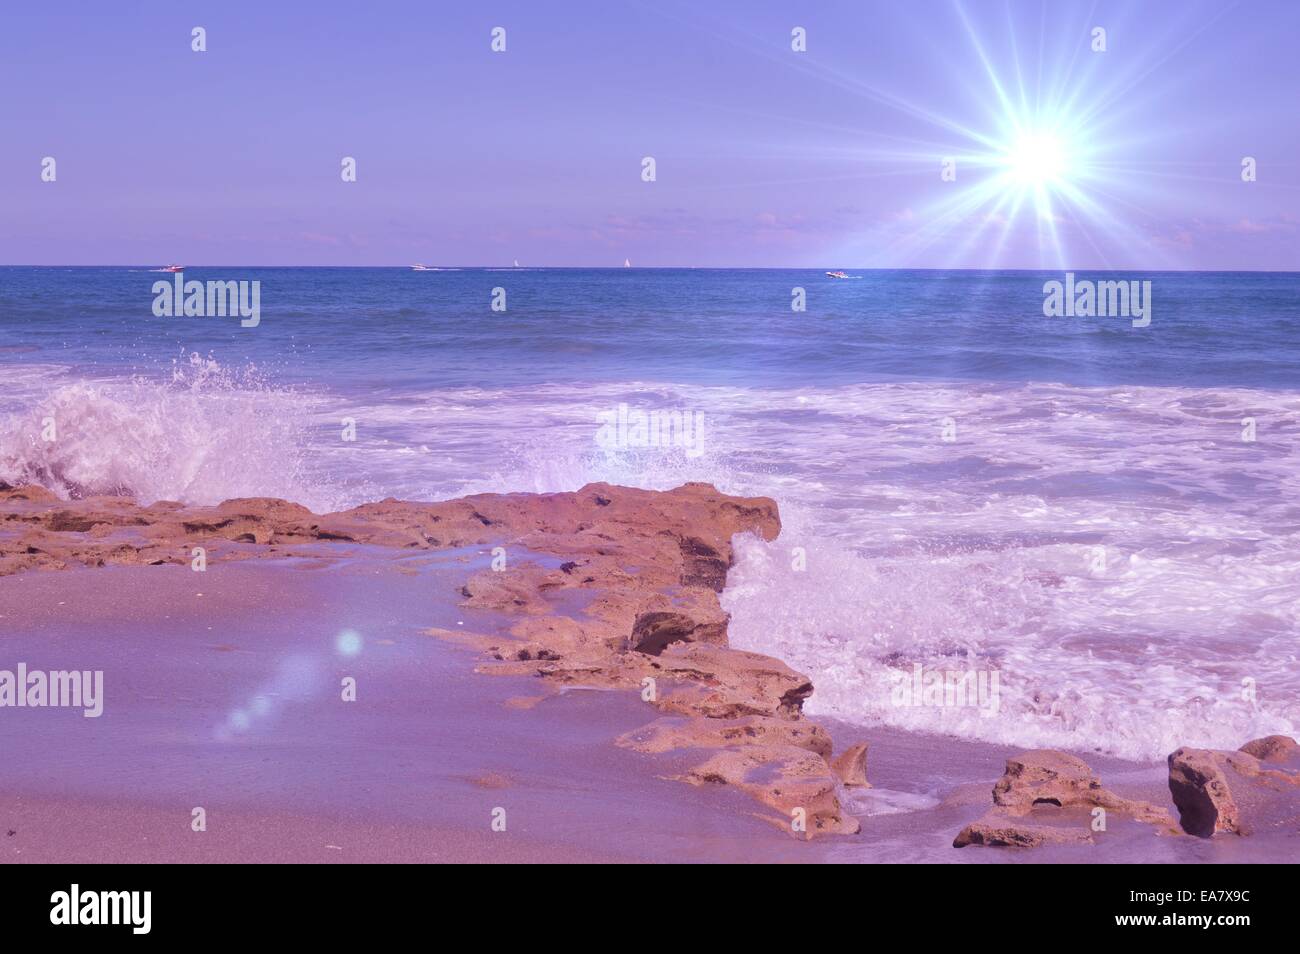 Star burst over rocky beach Stock Photo